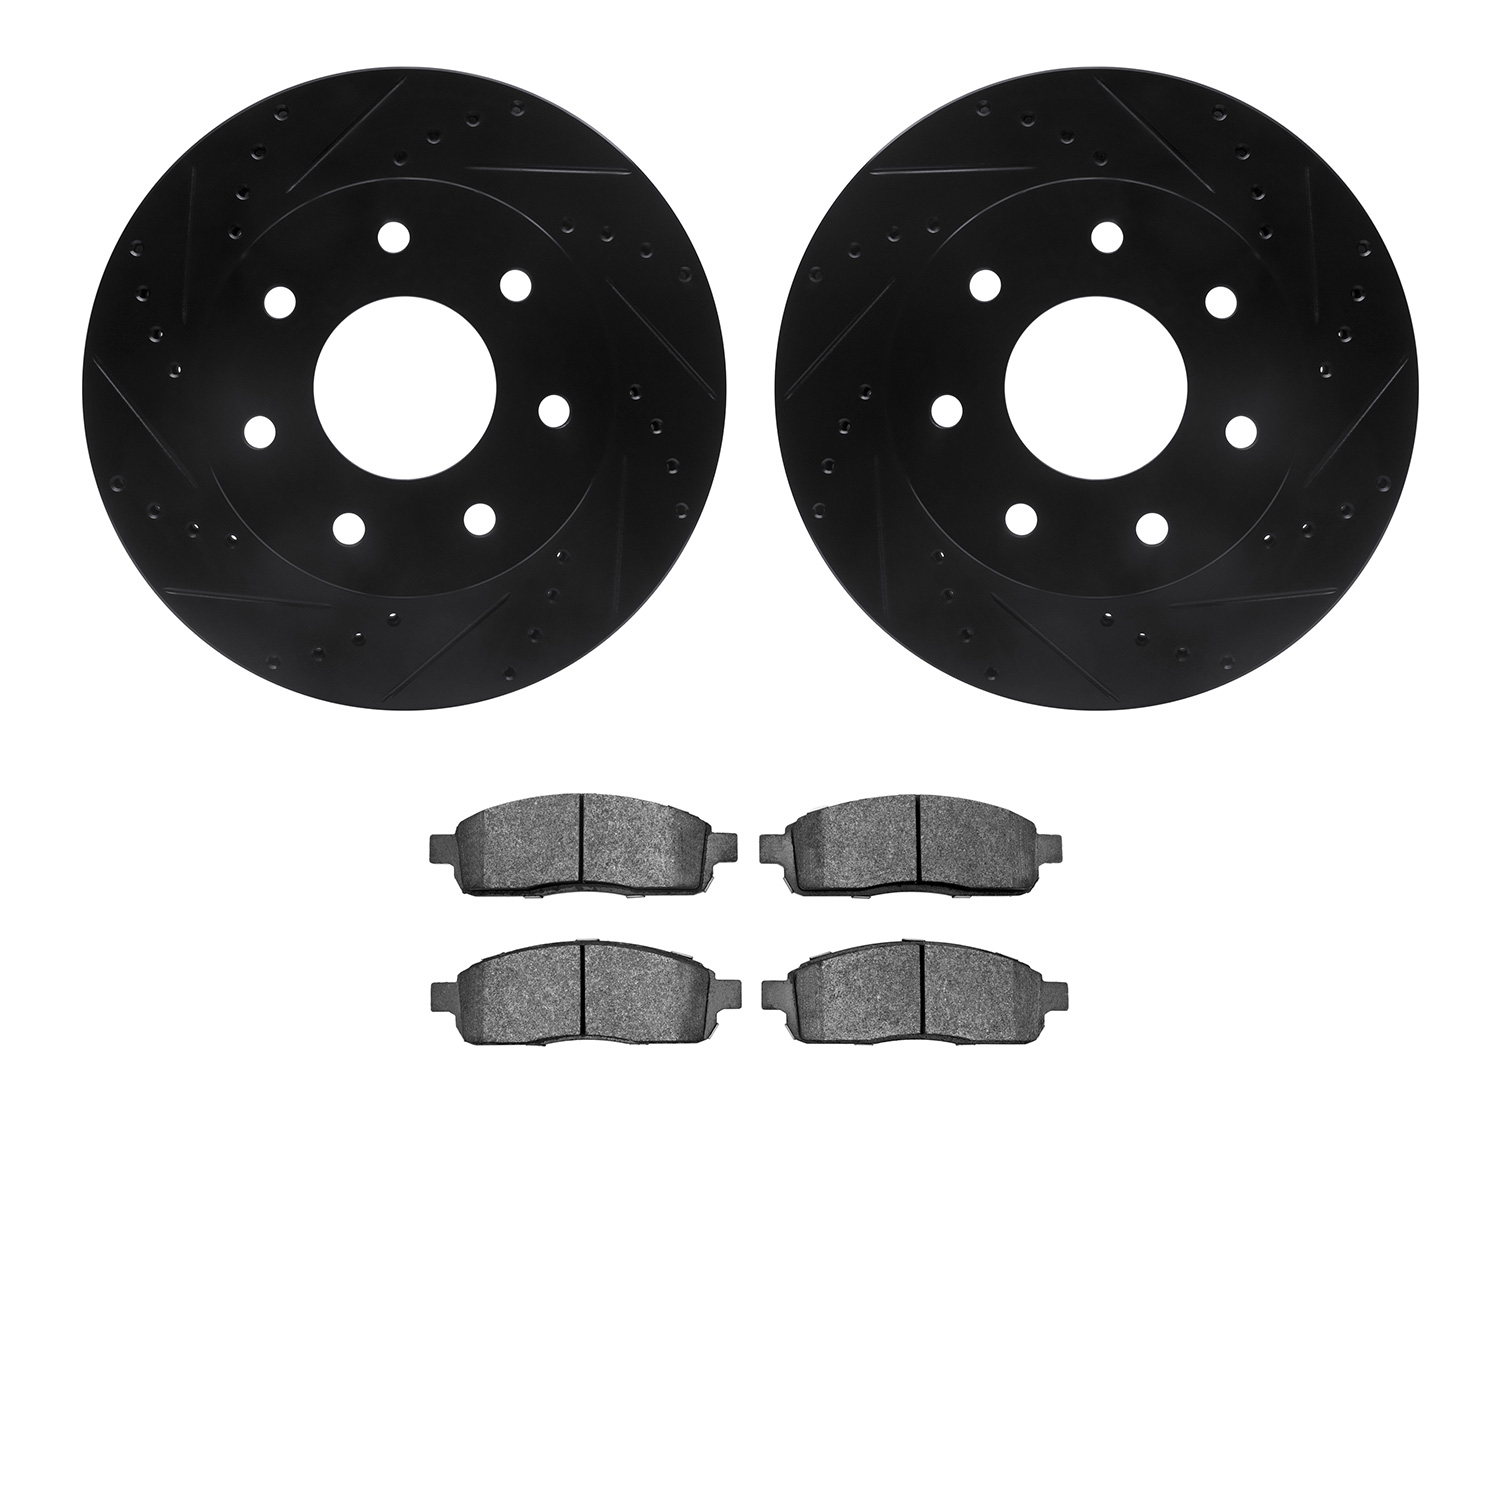 8302-54158 Drilled/Slotted Brake Rotors with 3000-Series Ceramic Brake Pads Kit [Black], 2004-2008 Ford/Lincoln/Mercury/Mazda, P